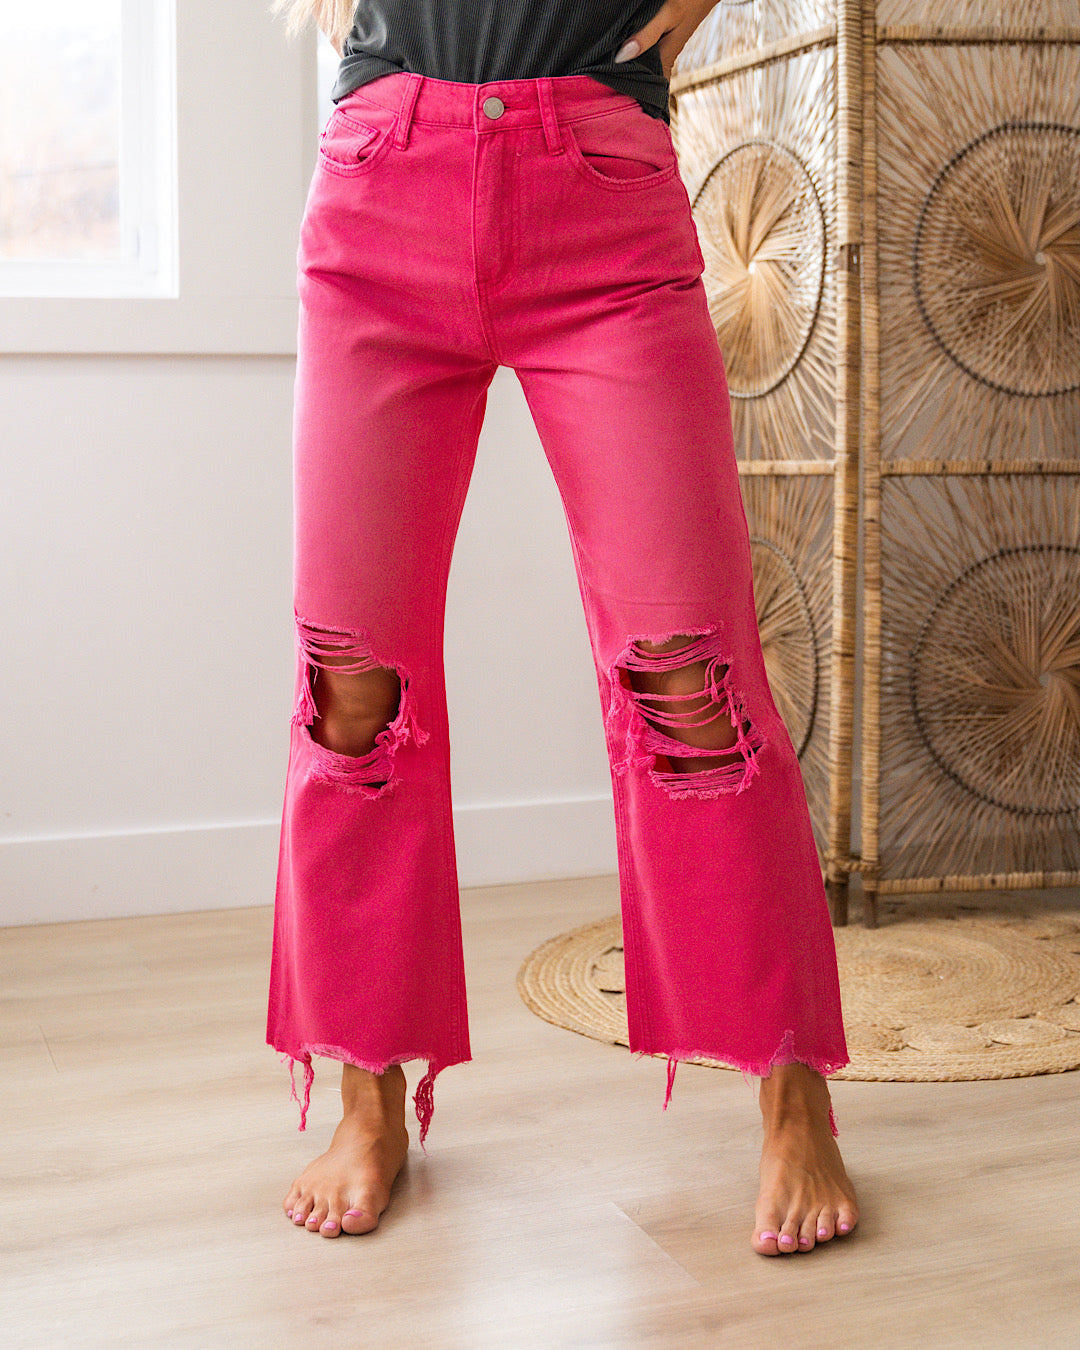 NEW! Vervet Hot Pink 90's Crop Flare Jeans  Vervet   